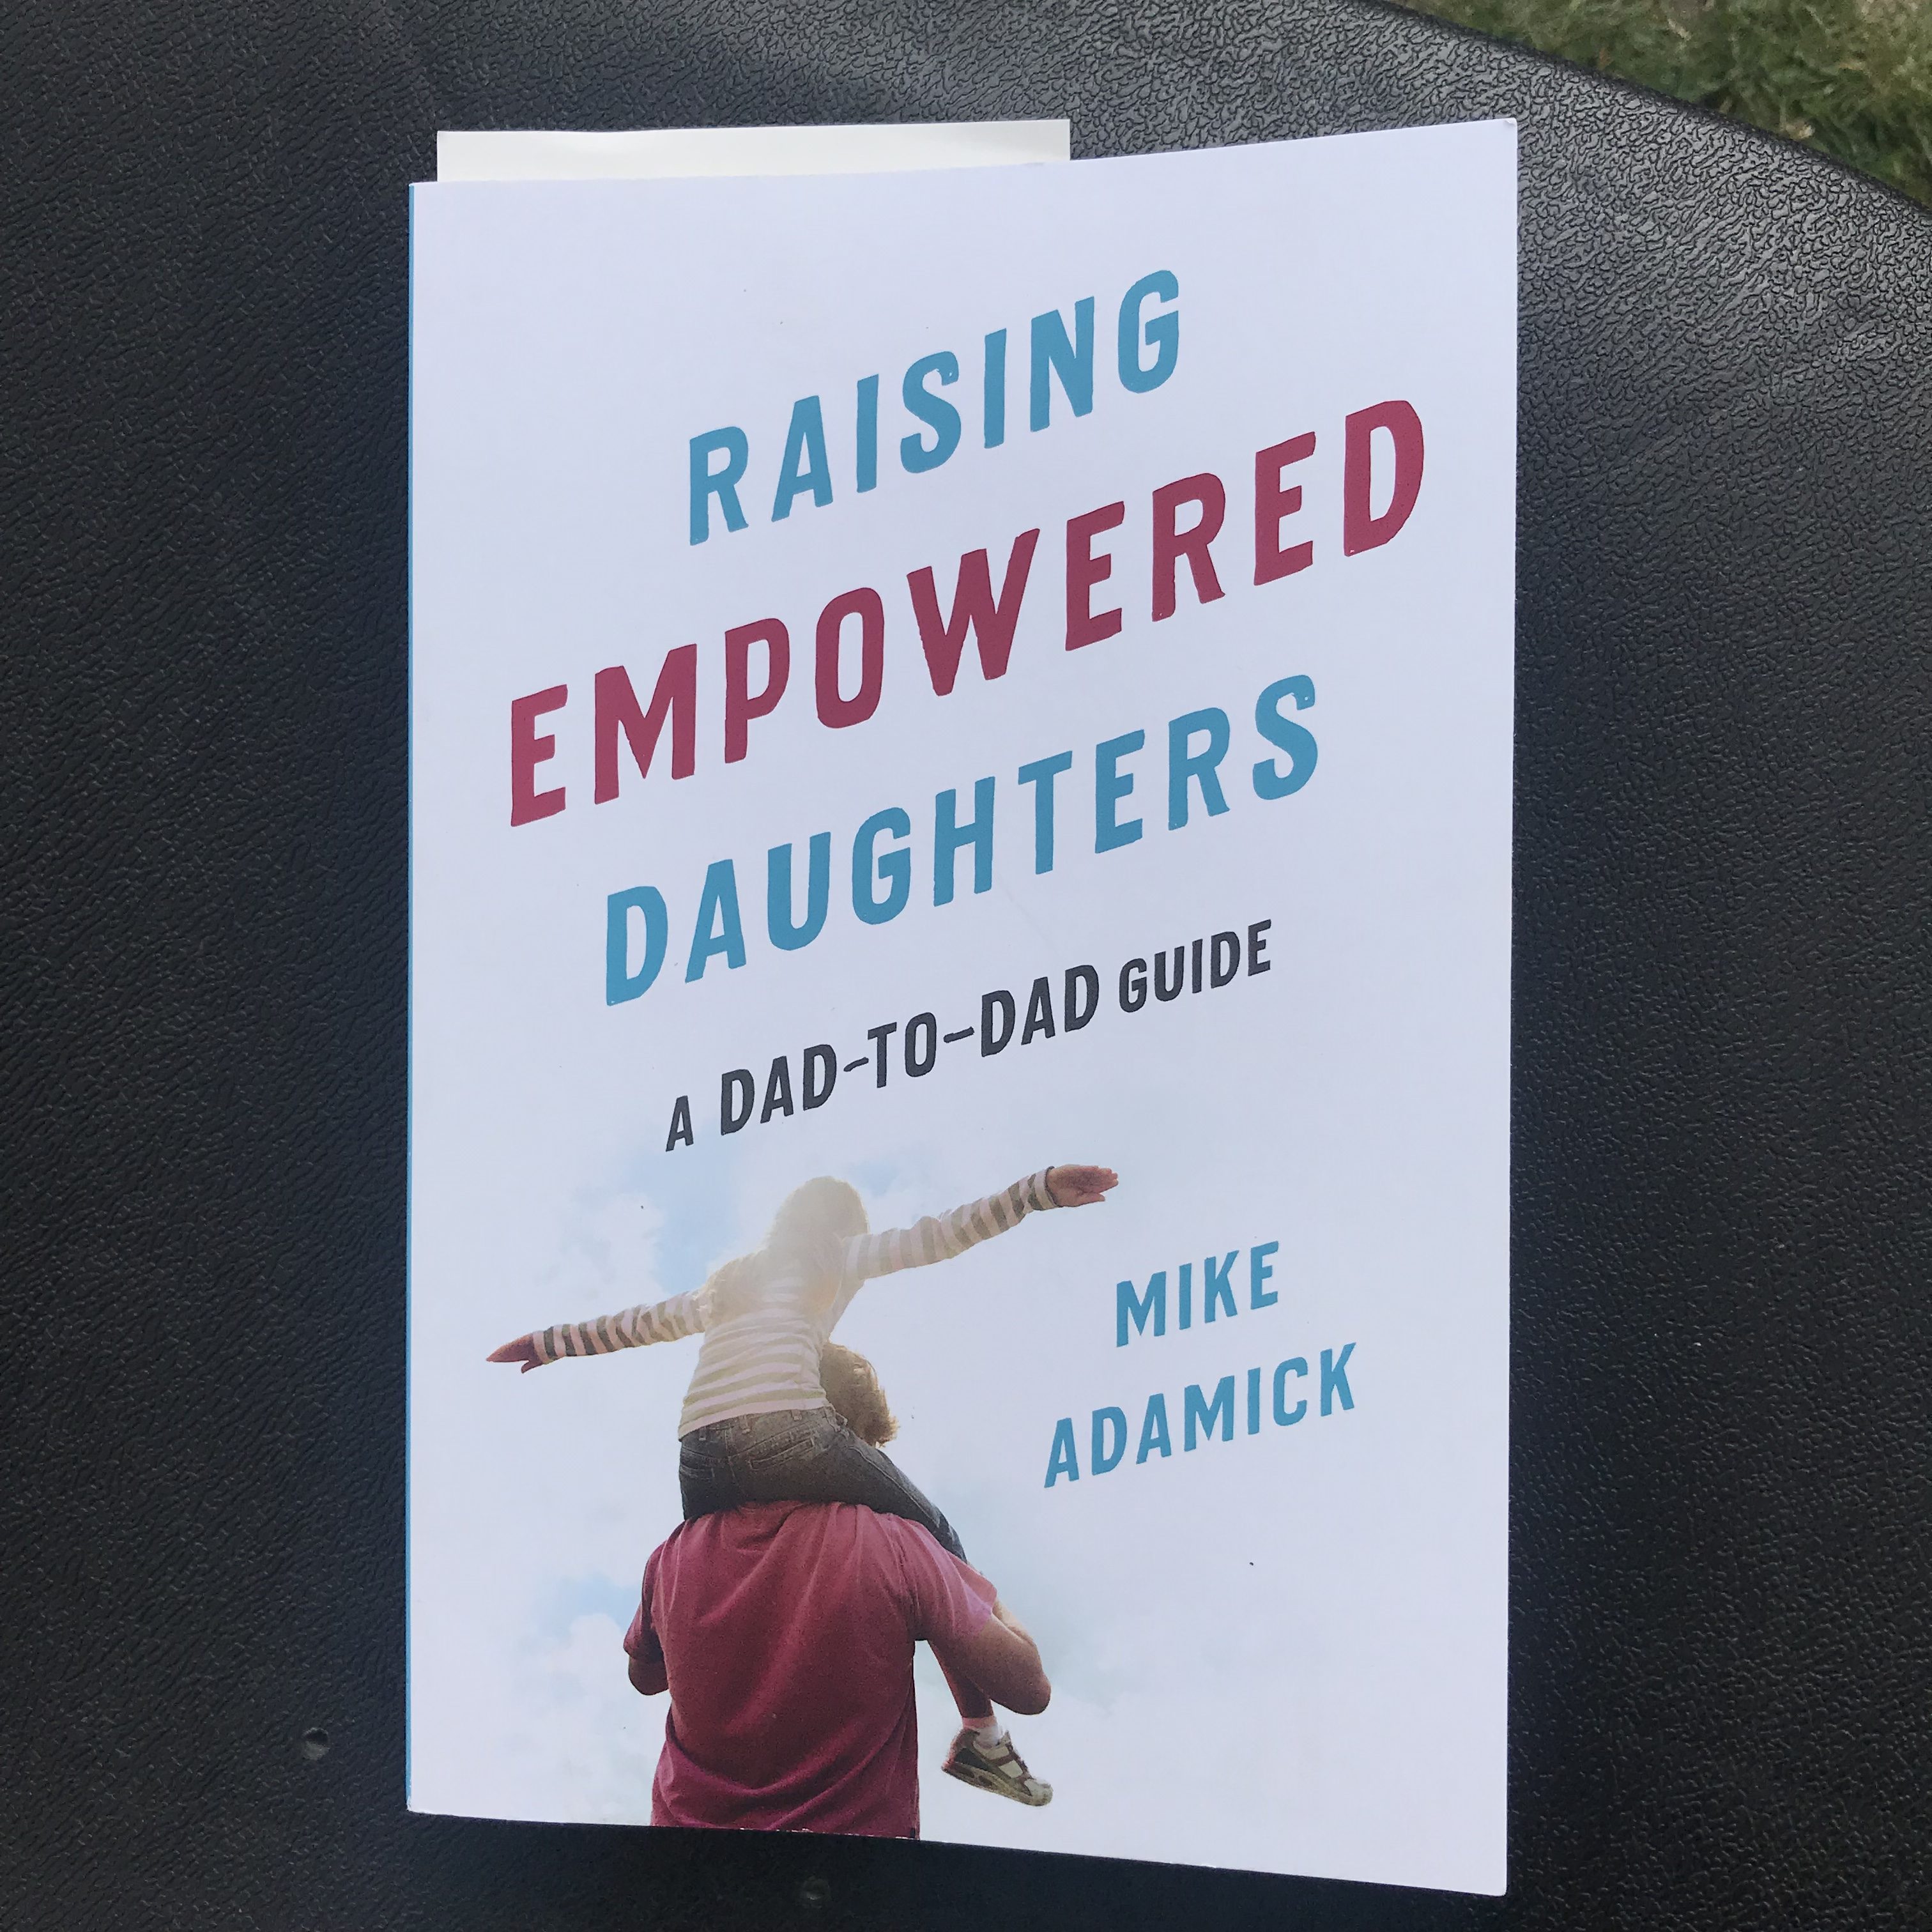 Raising Empowered Daughters